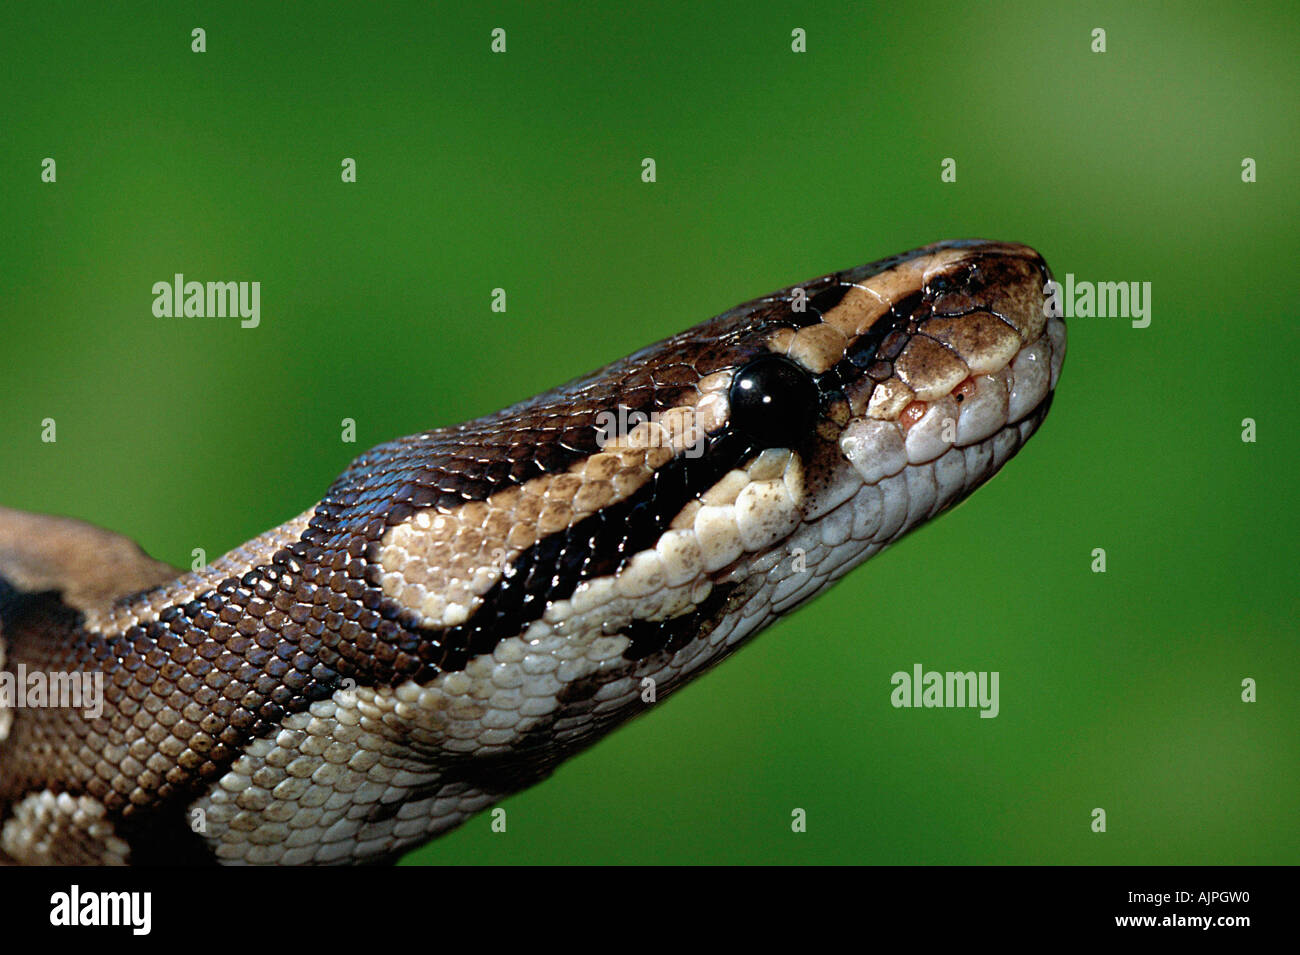 Royal Python Python regius Stock Photo